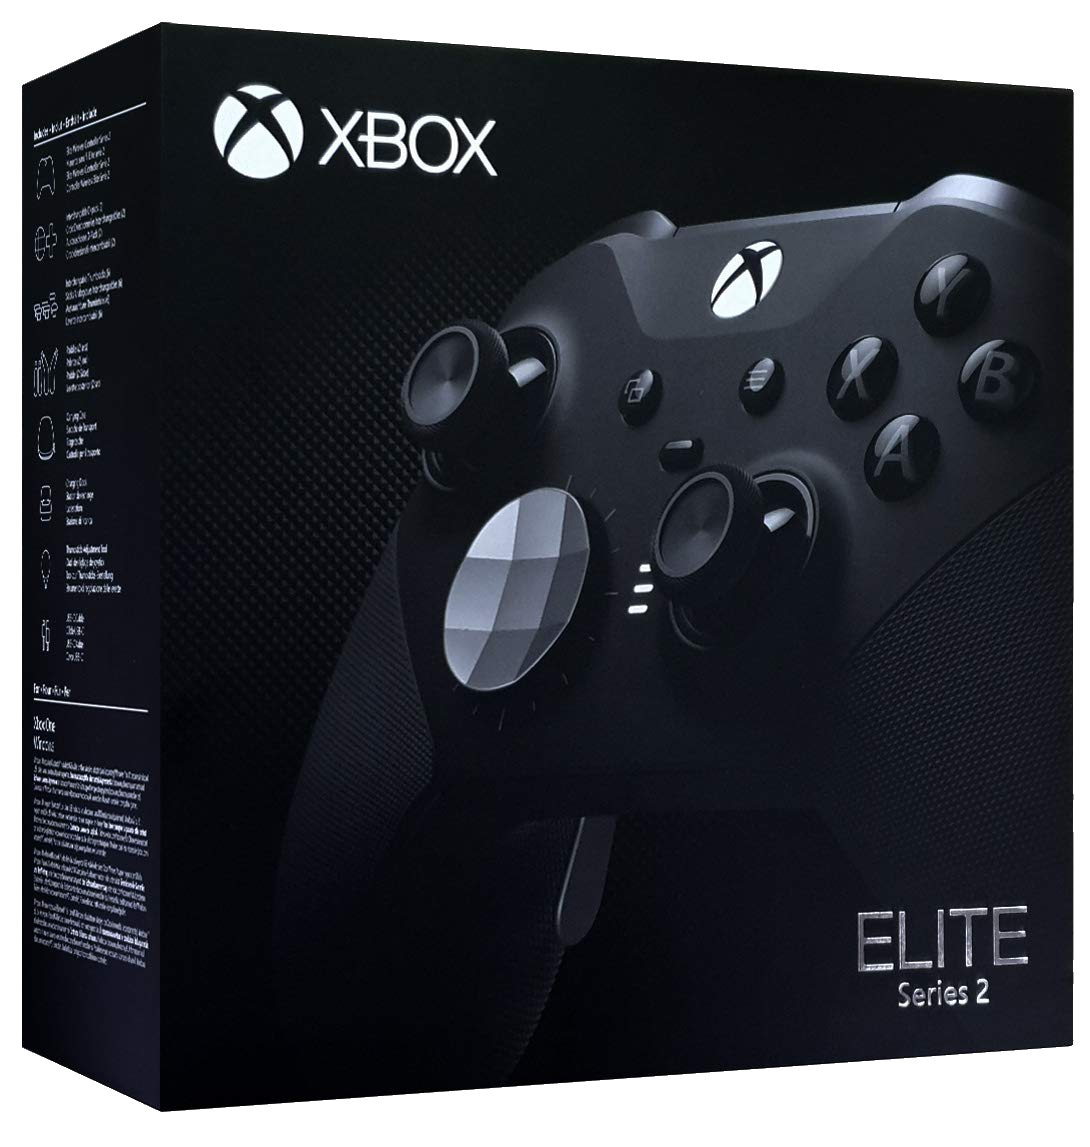 xbox elite controller series 2 for pc